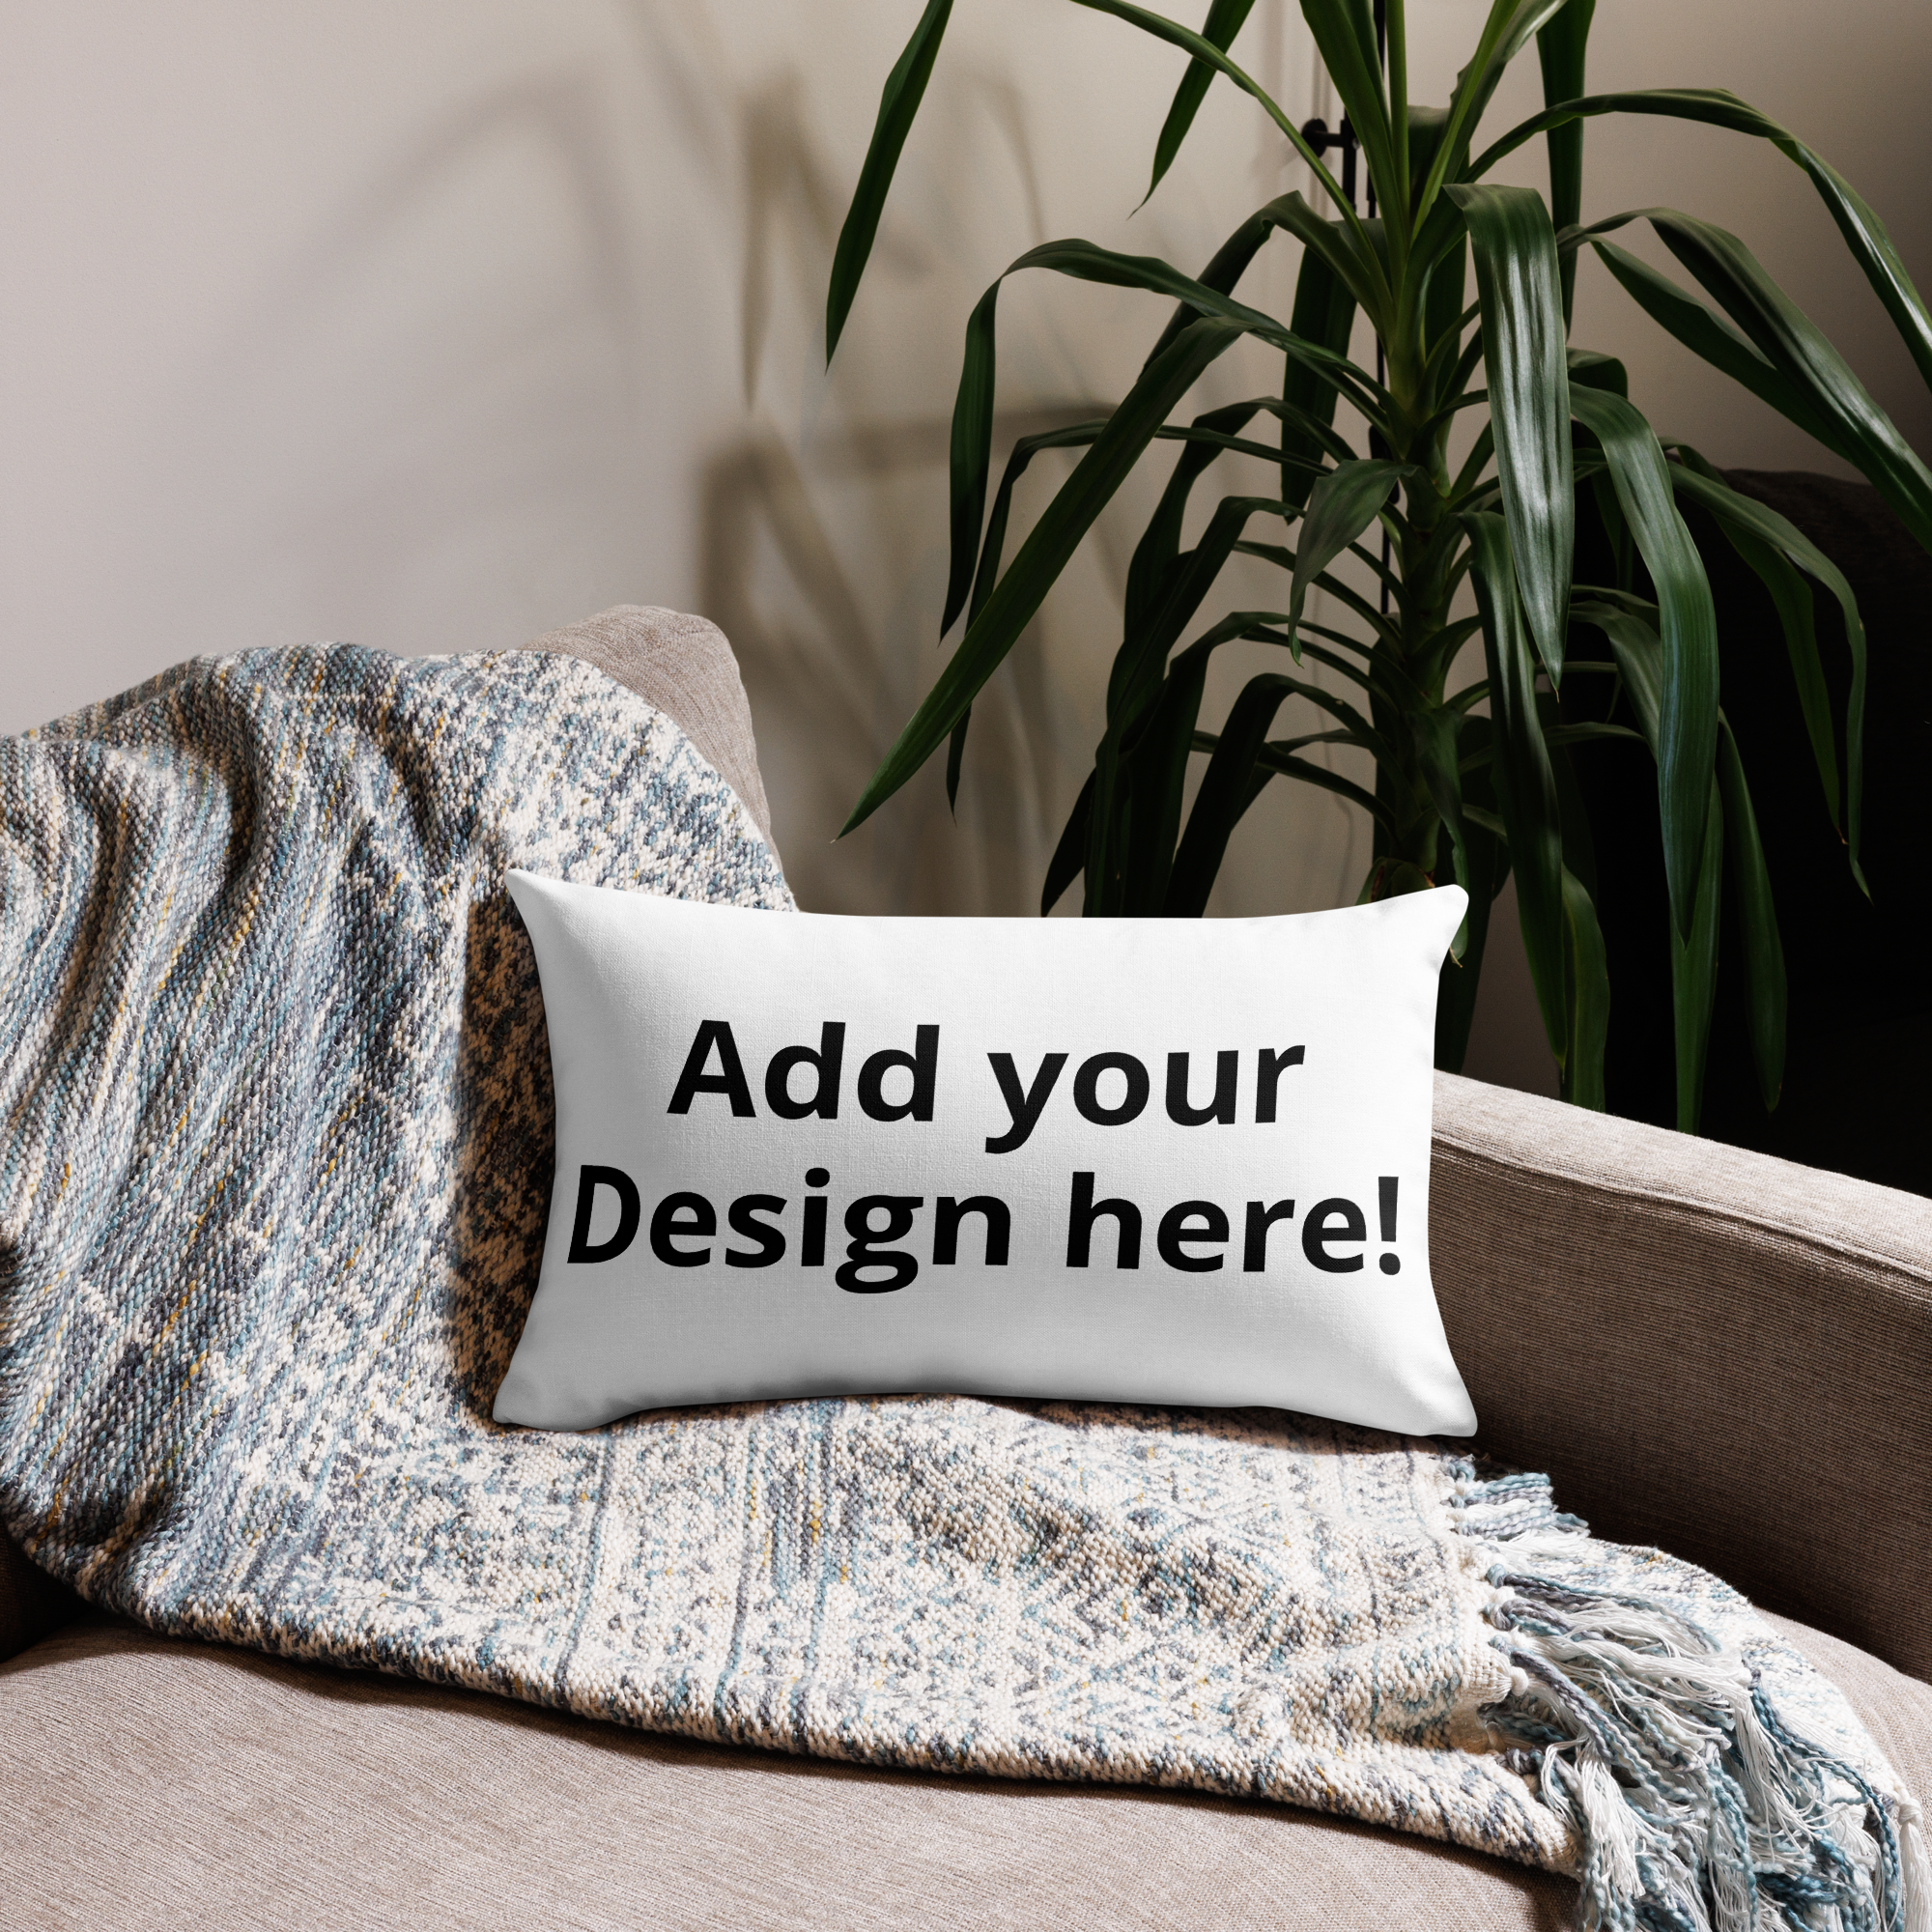 Create Your Own Décor Pillows